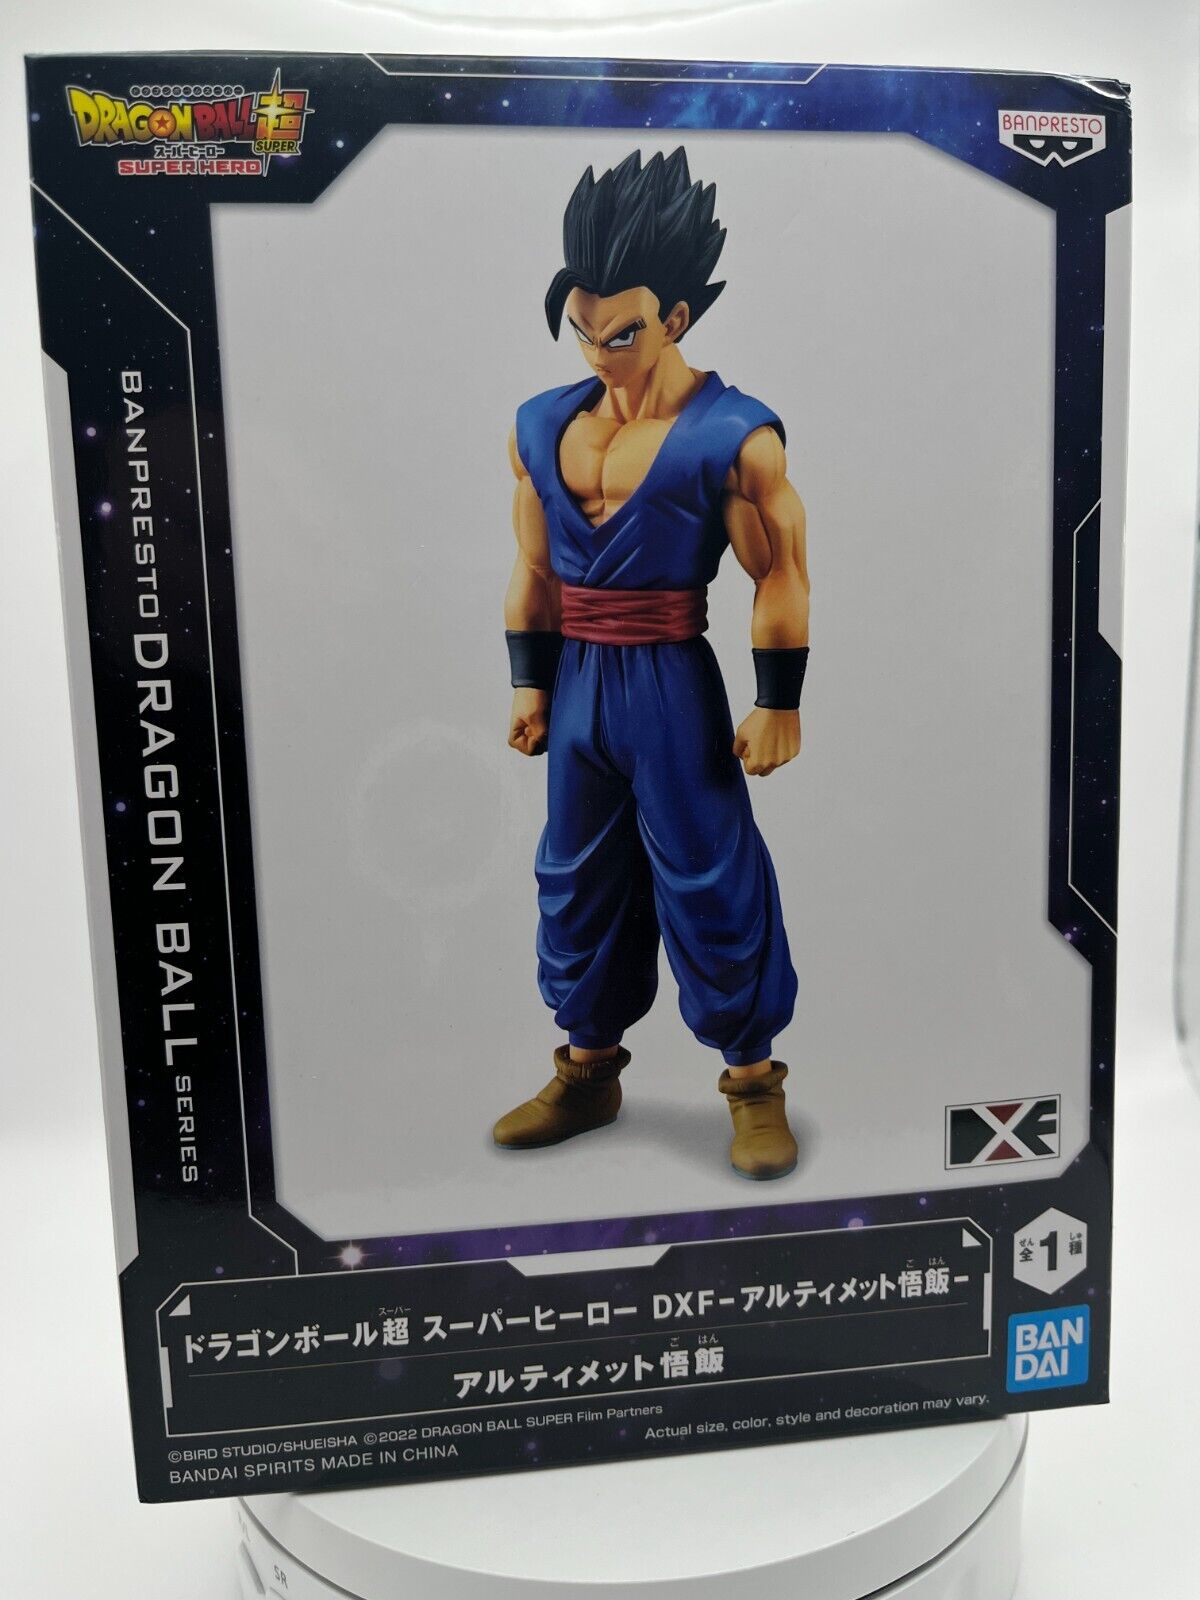 Banpres Dragon ball Series Super Hero DXF Ultimate Gohan Figure New in Box